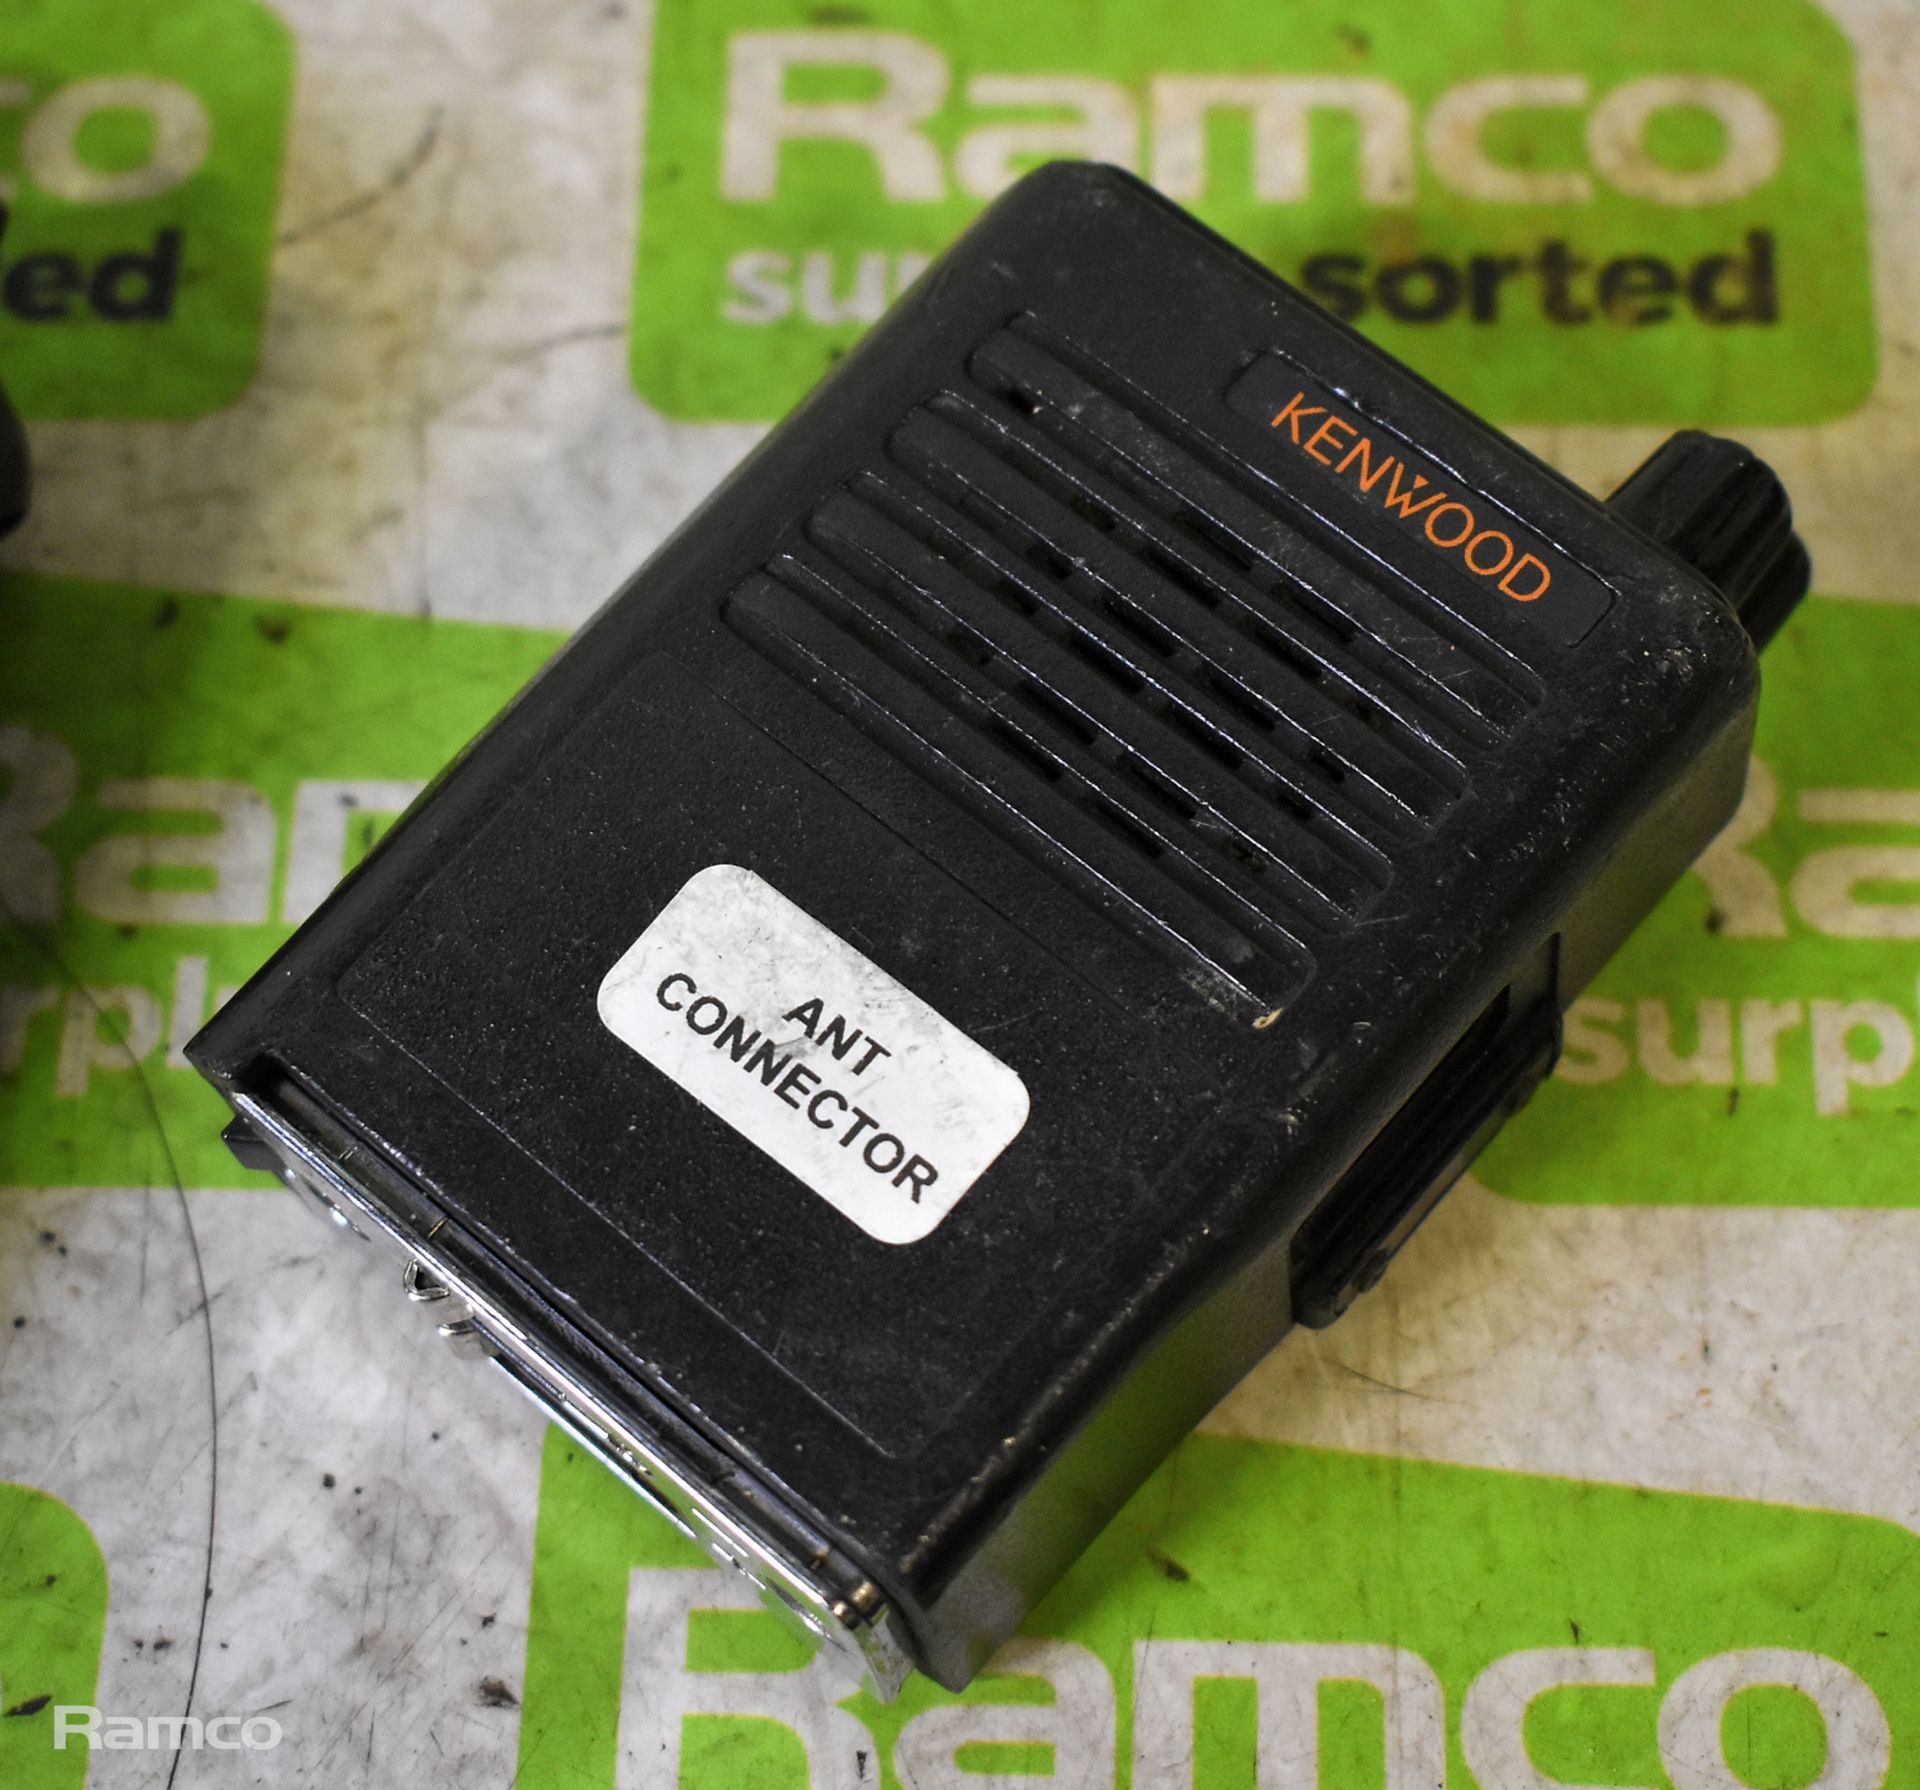 Approx 57x assorted two way radios - 19x Motorola GP900, 19x GP300, 10x Vertex, 1x Icom, 1x Maxon - Image 5 of 6